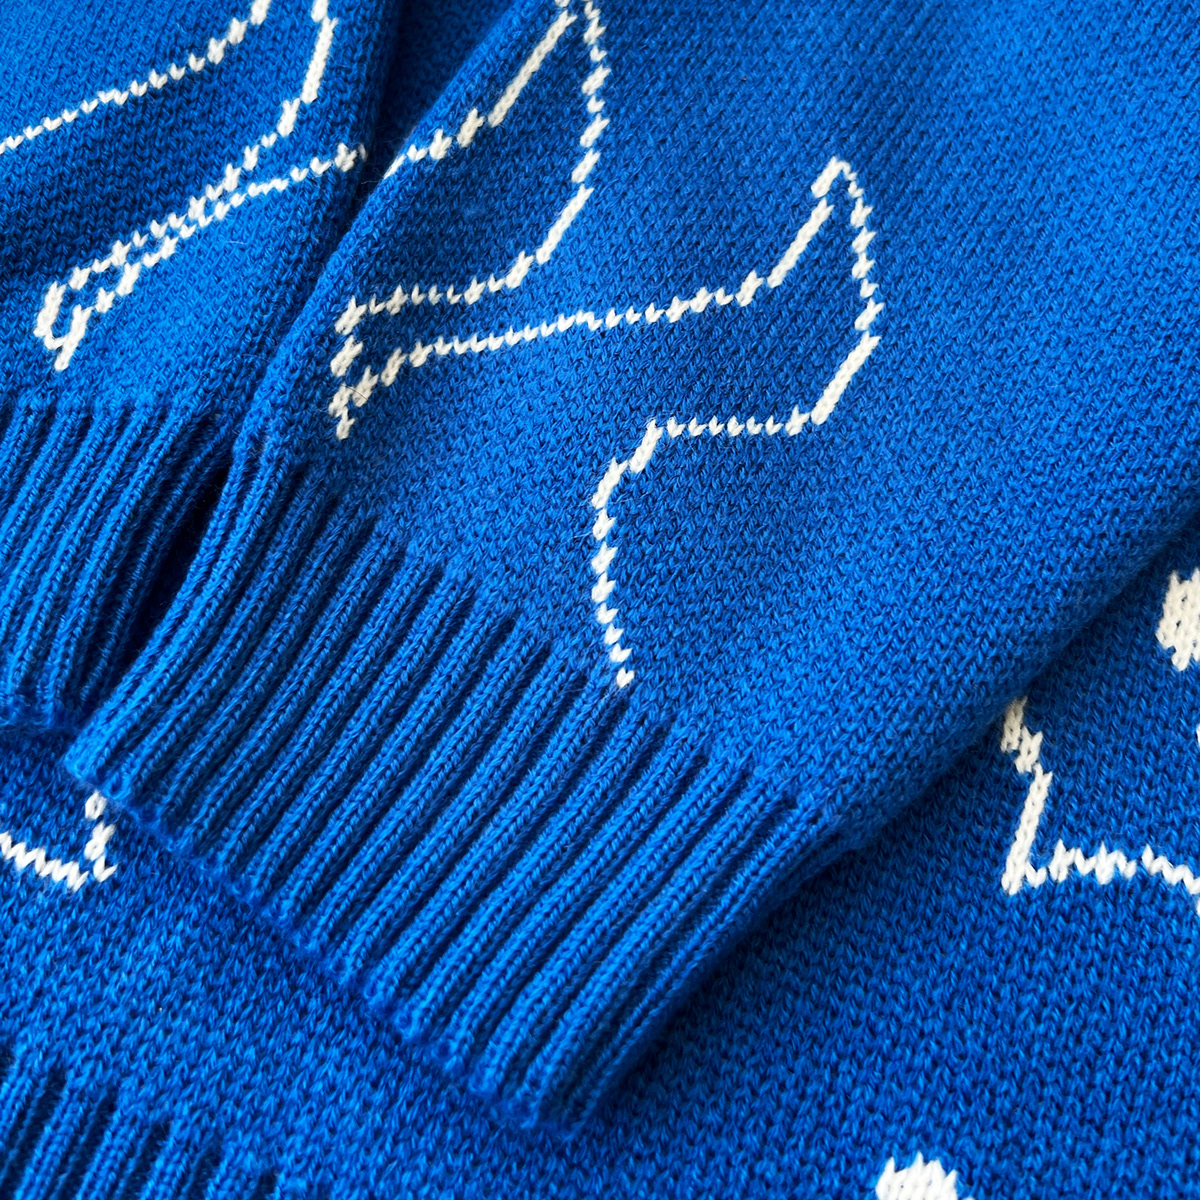 sweater knitting knitwear Clothing apparel merchandise print catalina vasquez kathiuska knitwear design